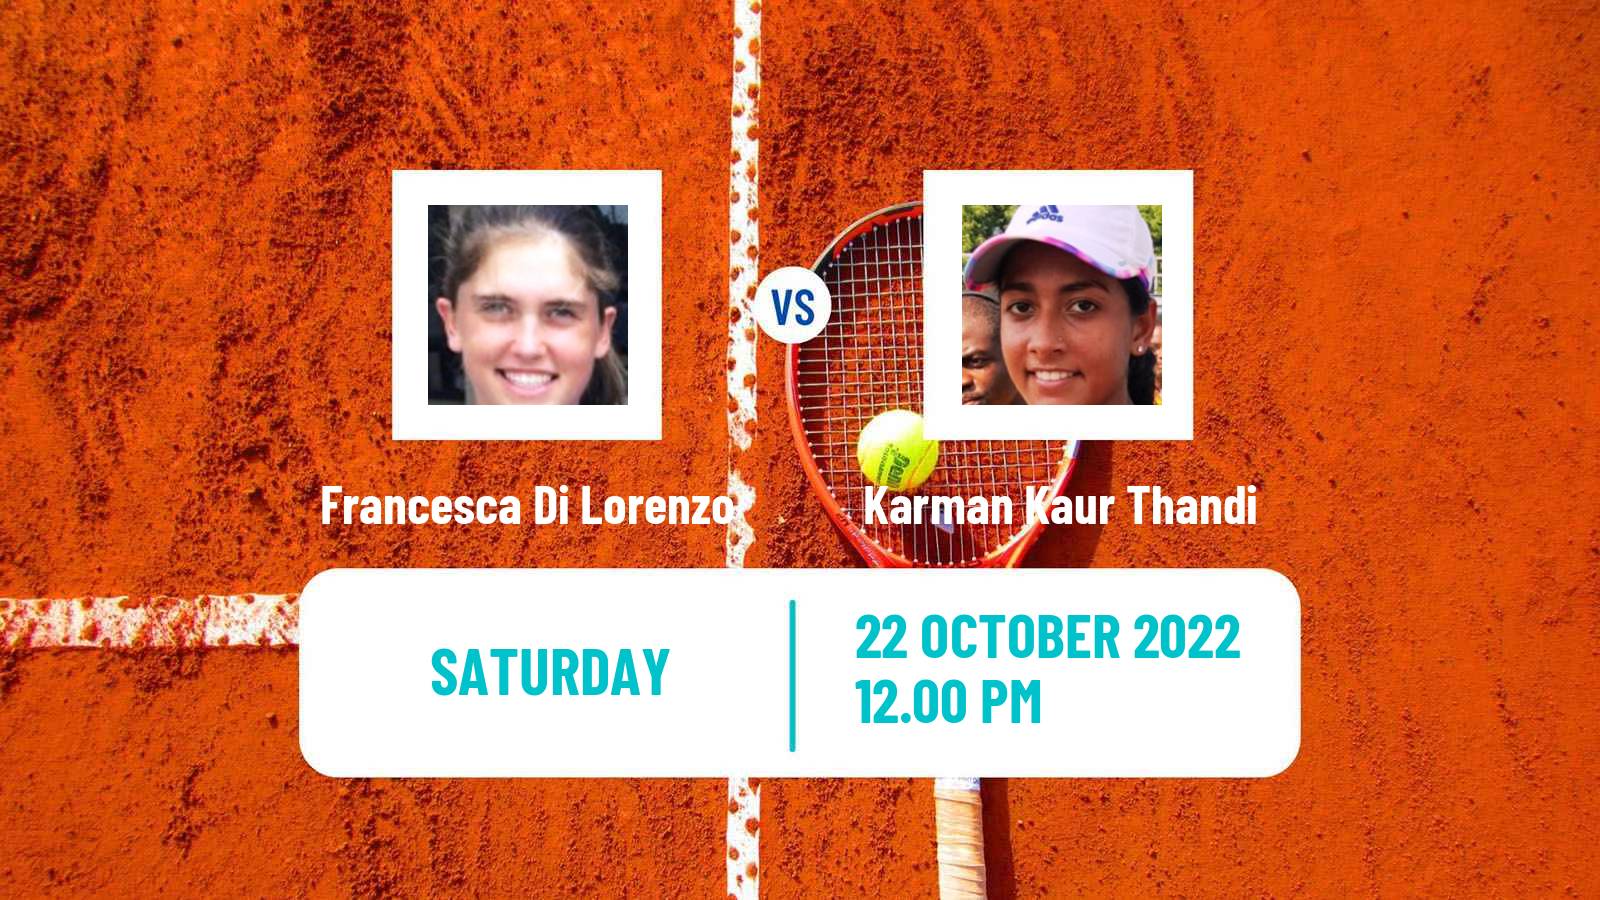 Tennis ITF Tournaments Francesca Di Lorenzo - Karman Kaur Thandi